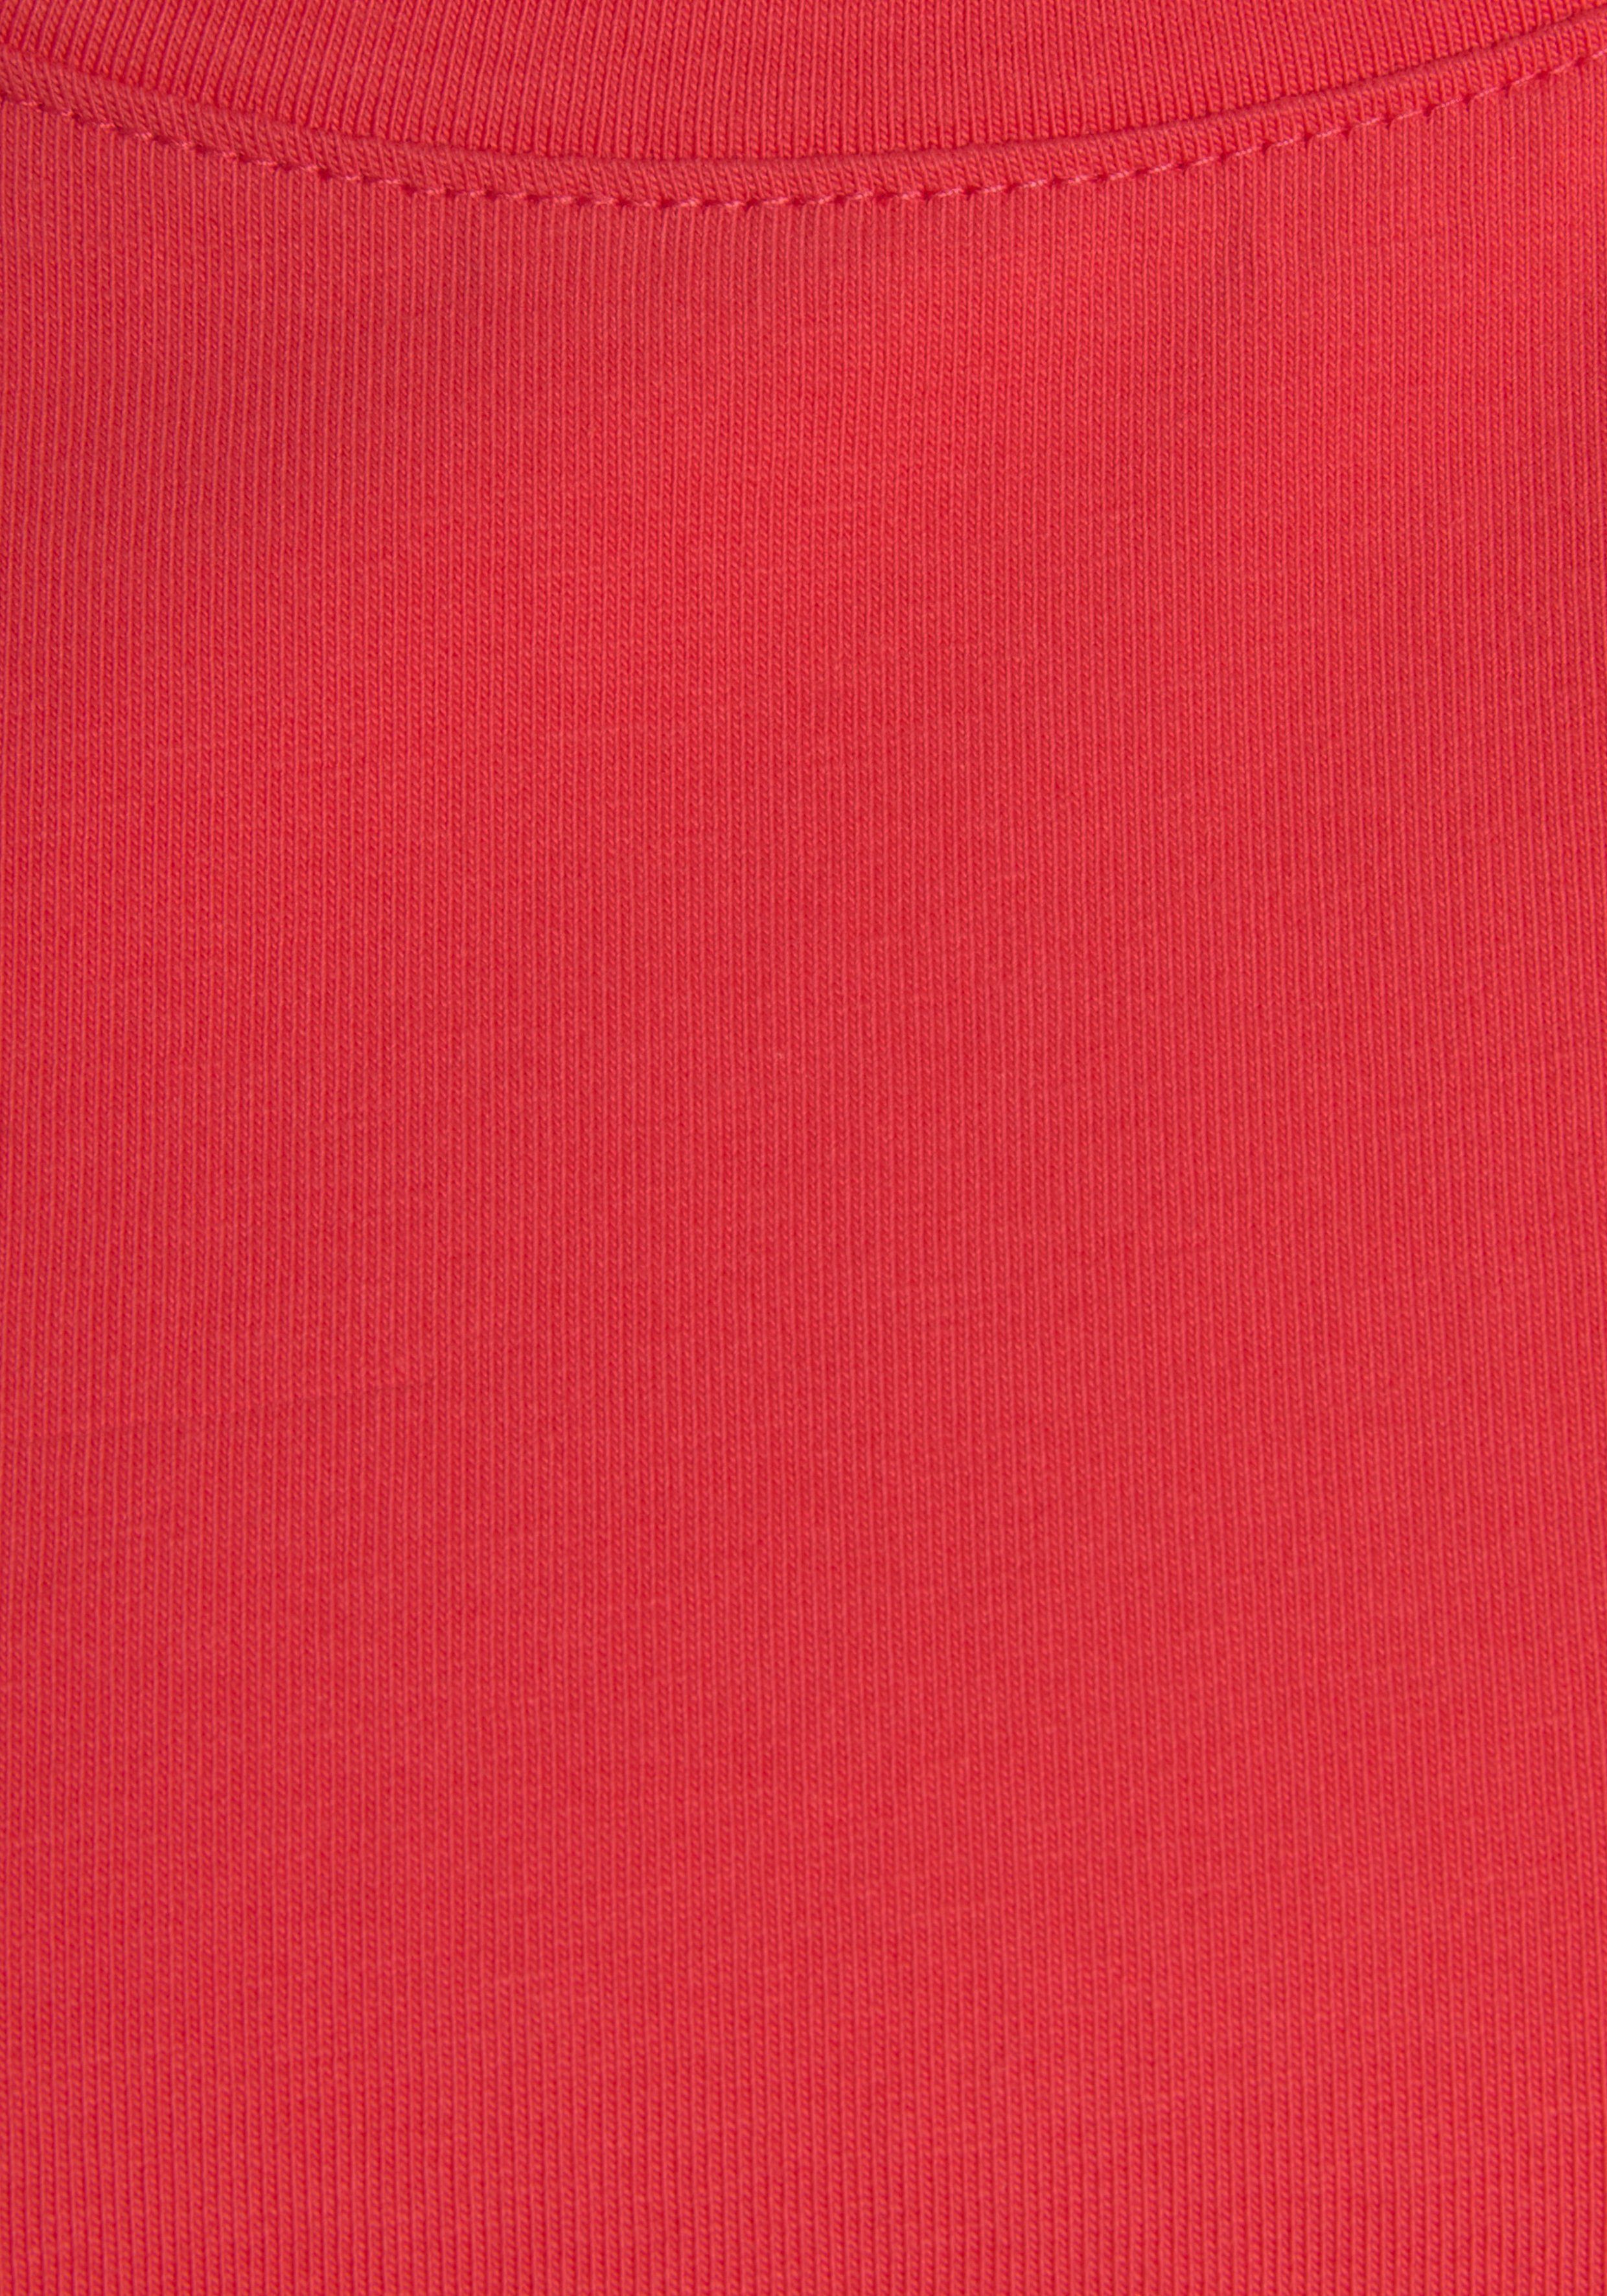 T-Shirt rot Ärmelaufschlag mit im Loungewear maritimen H.I.S Stil,